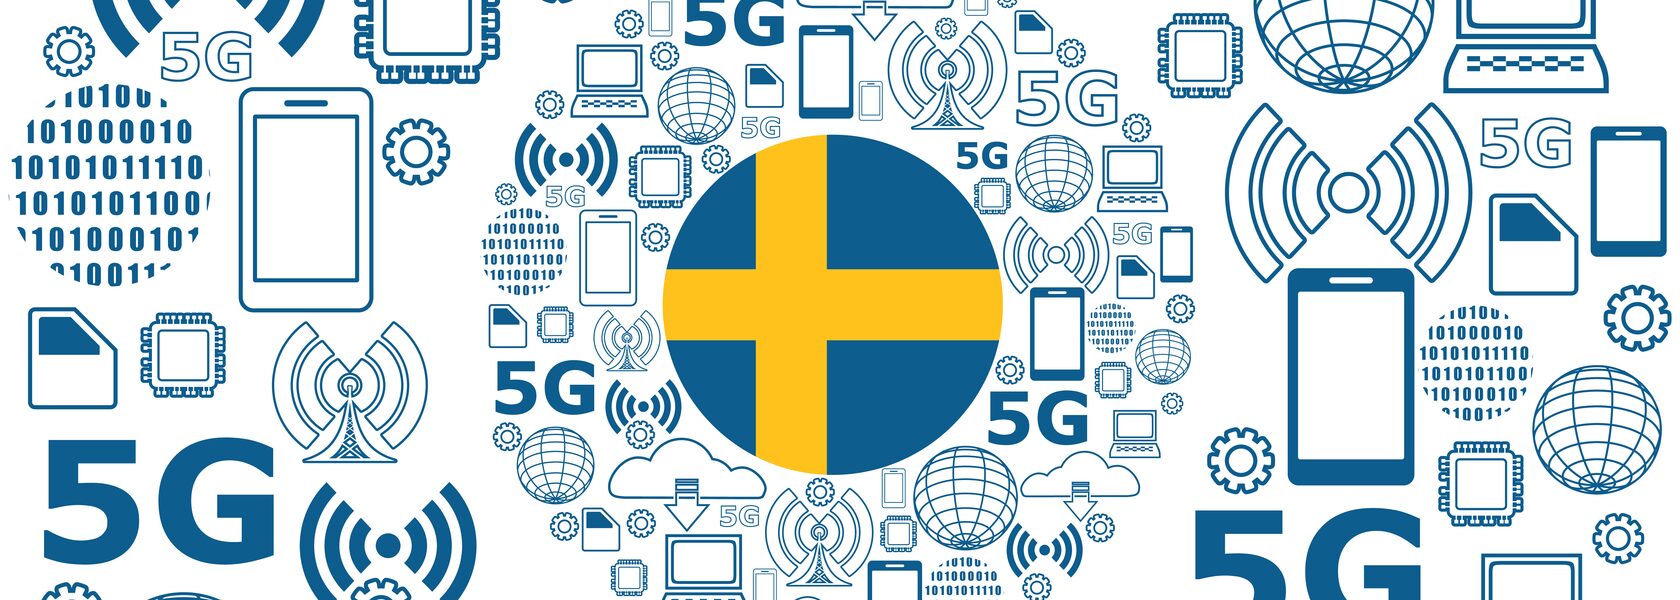 5G in sweden